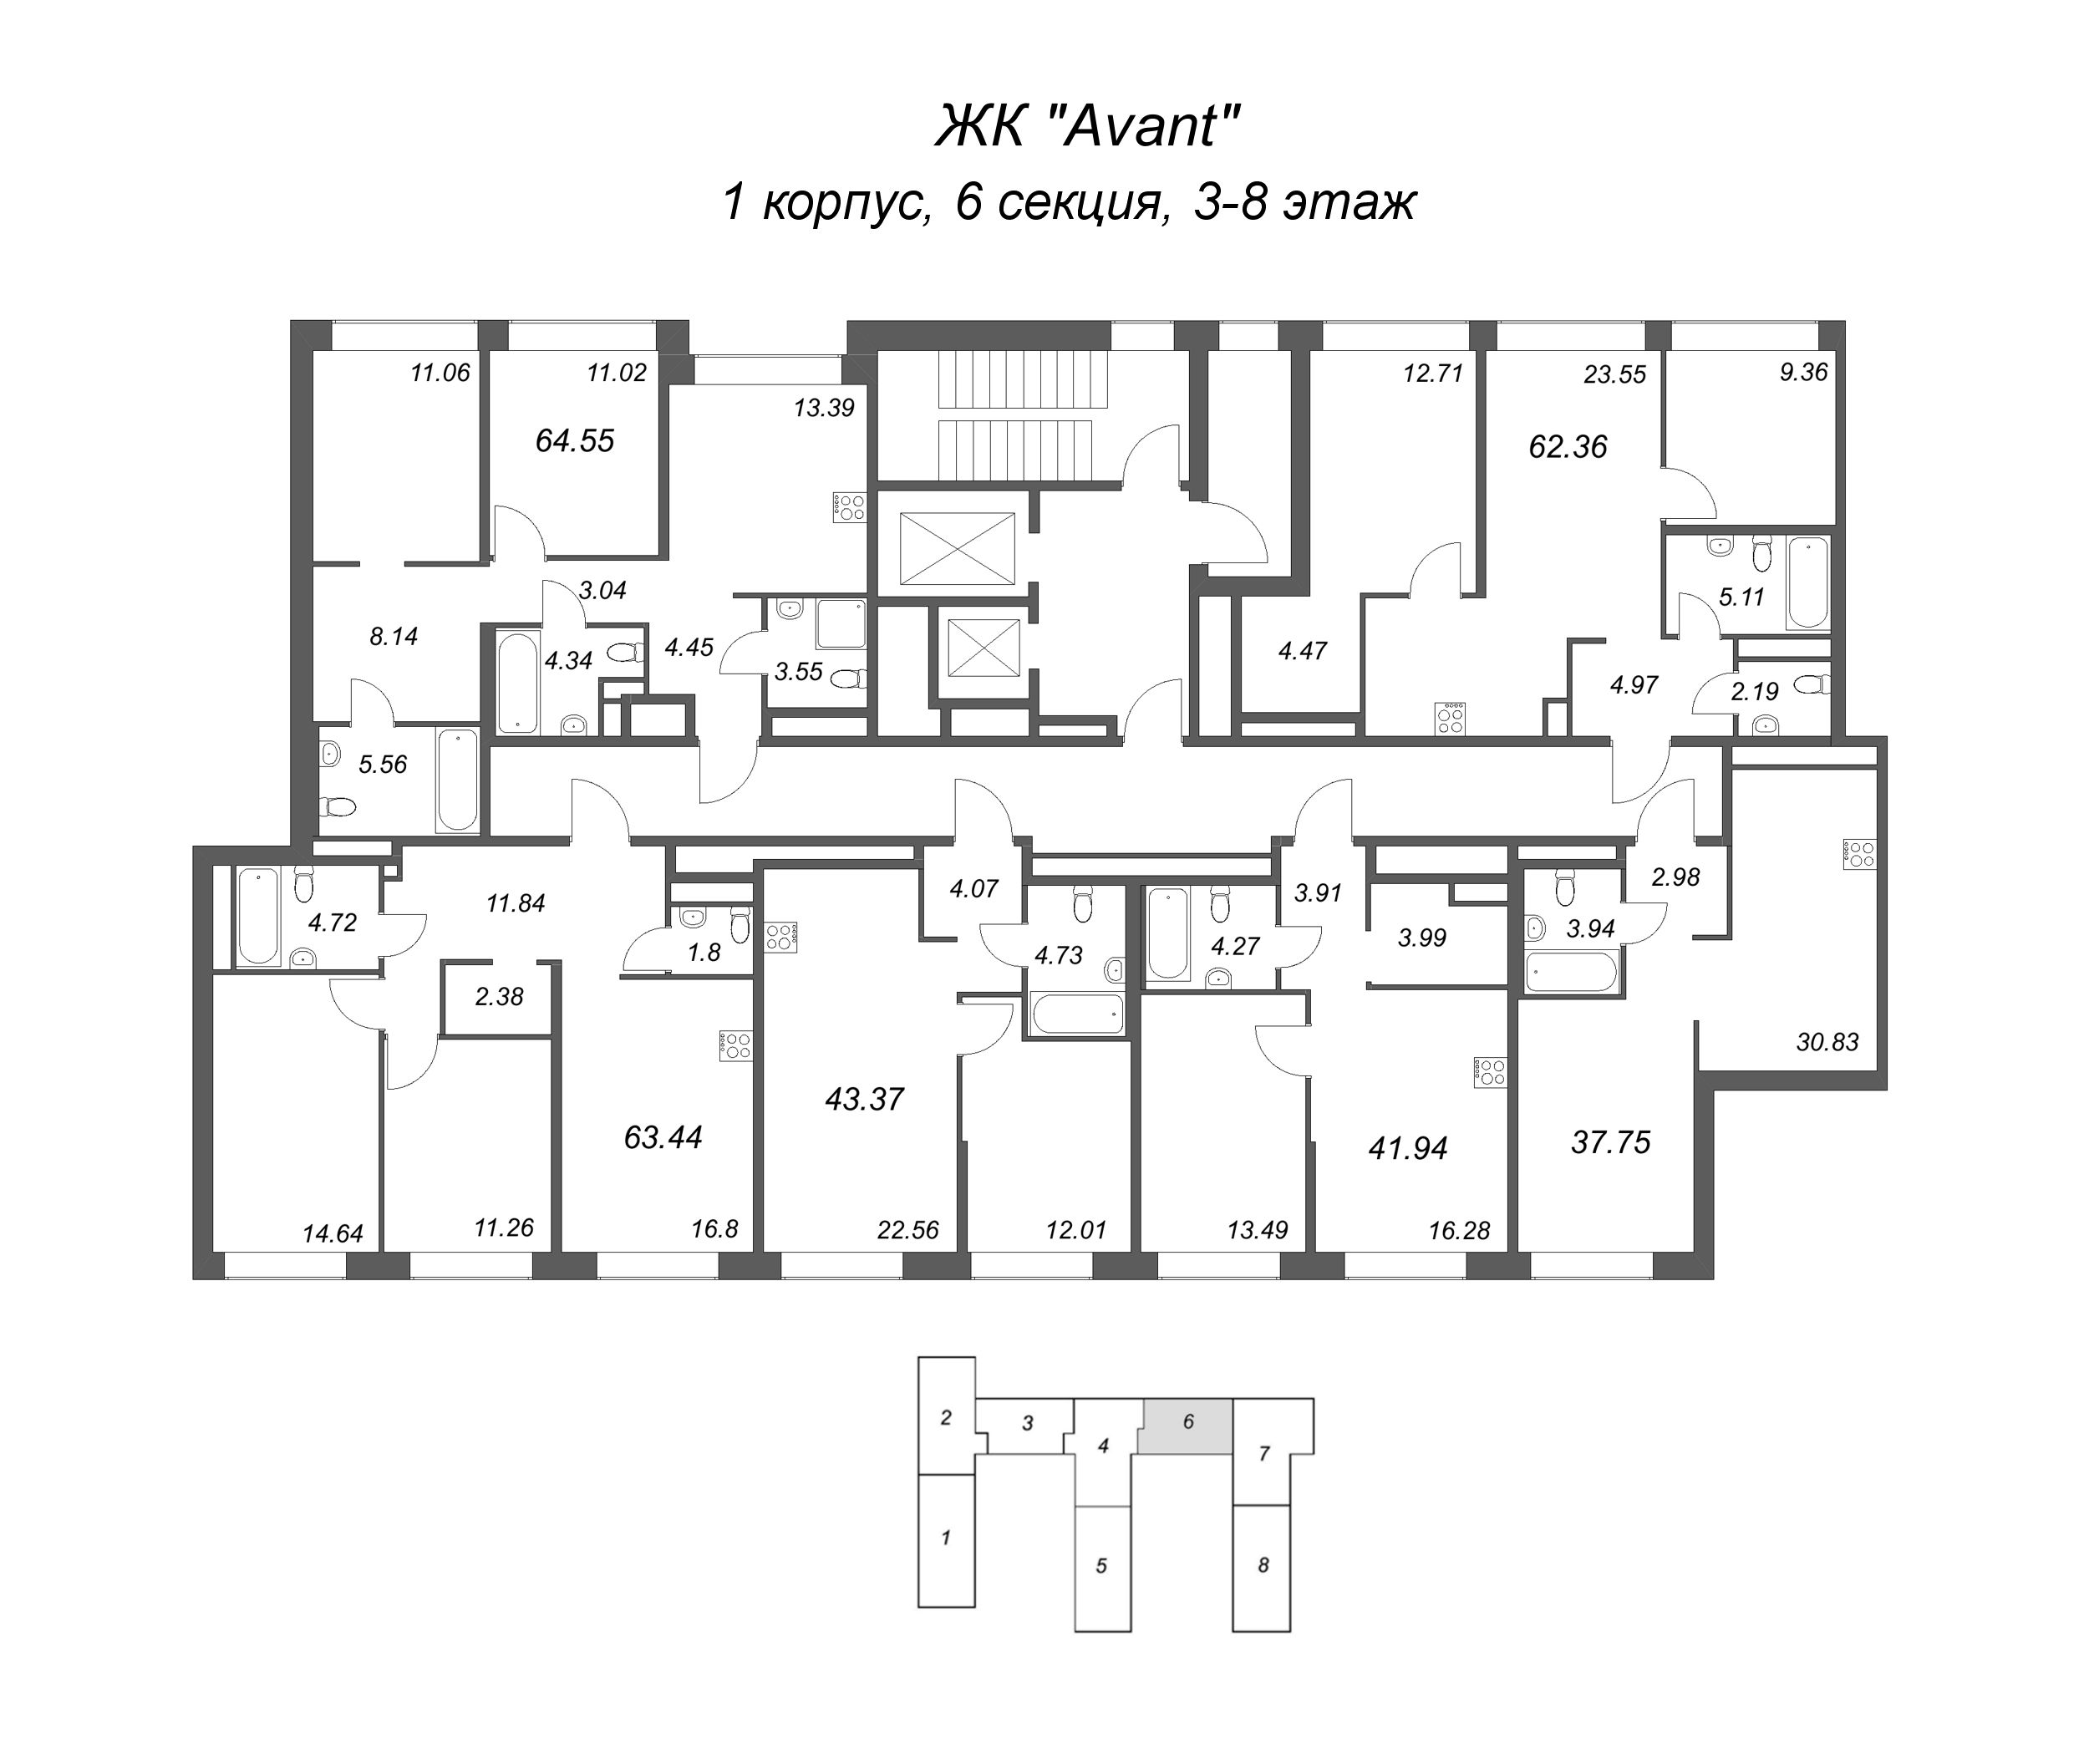 2-комнатная (Евро) квартира, 43.37 м² - планировка этажа